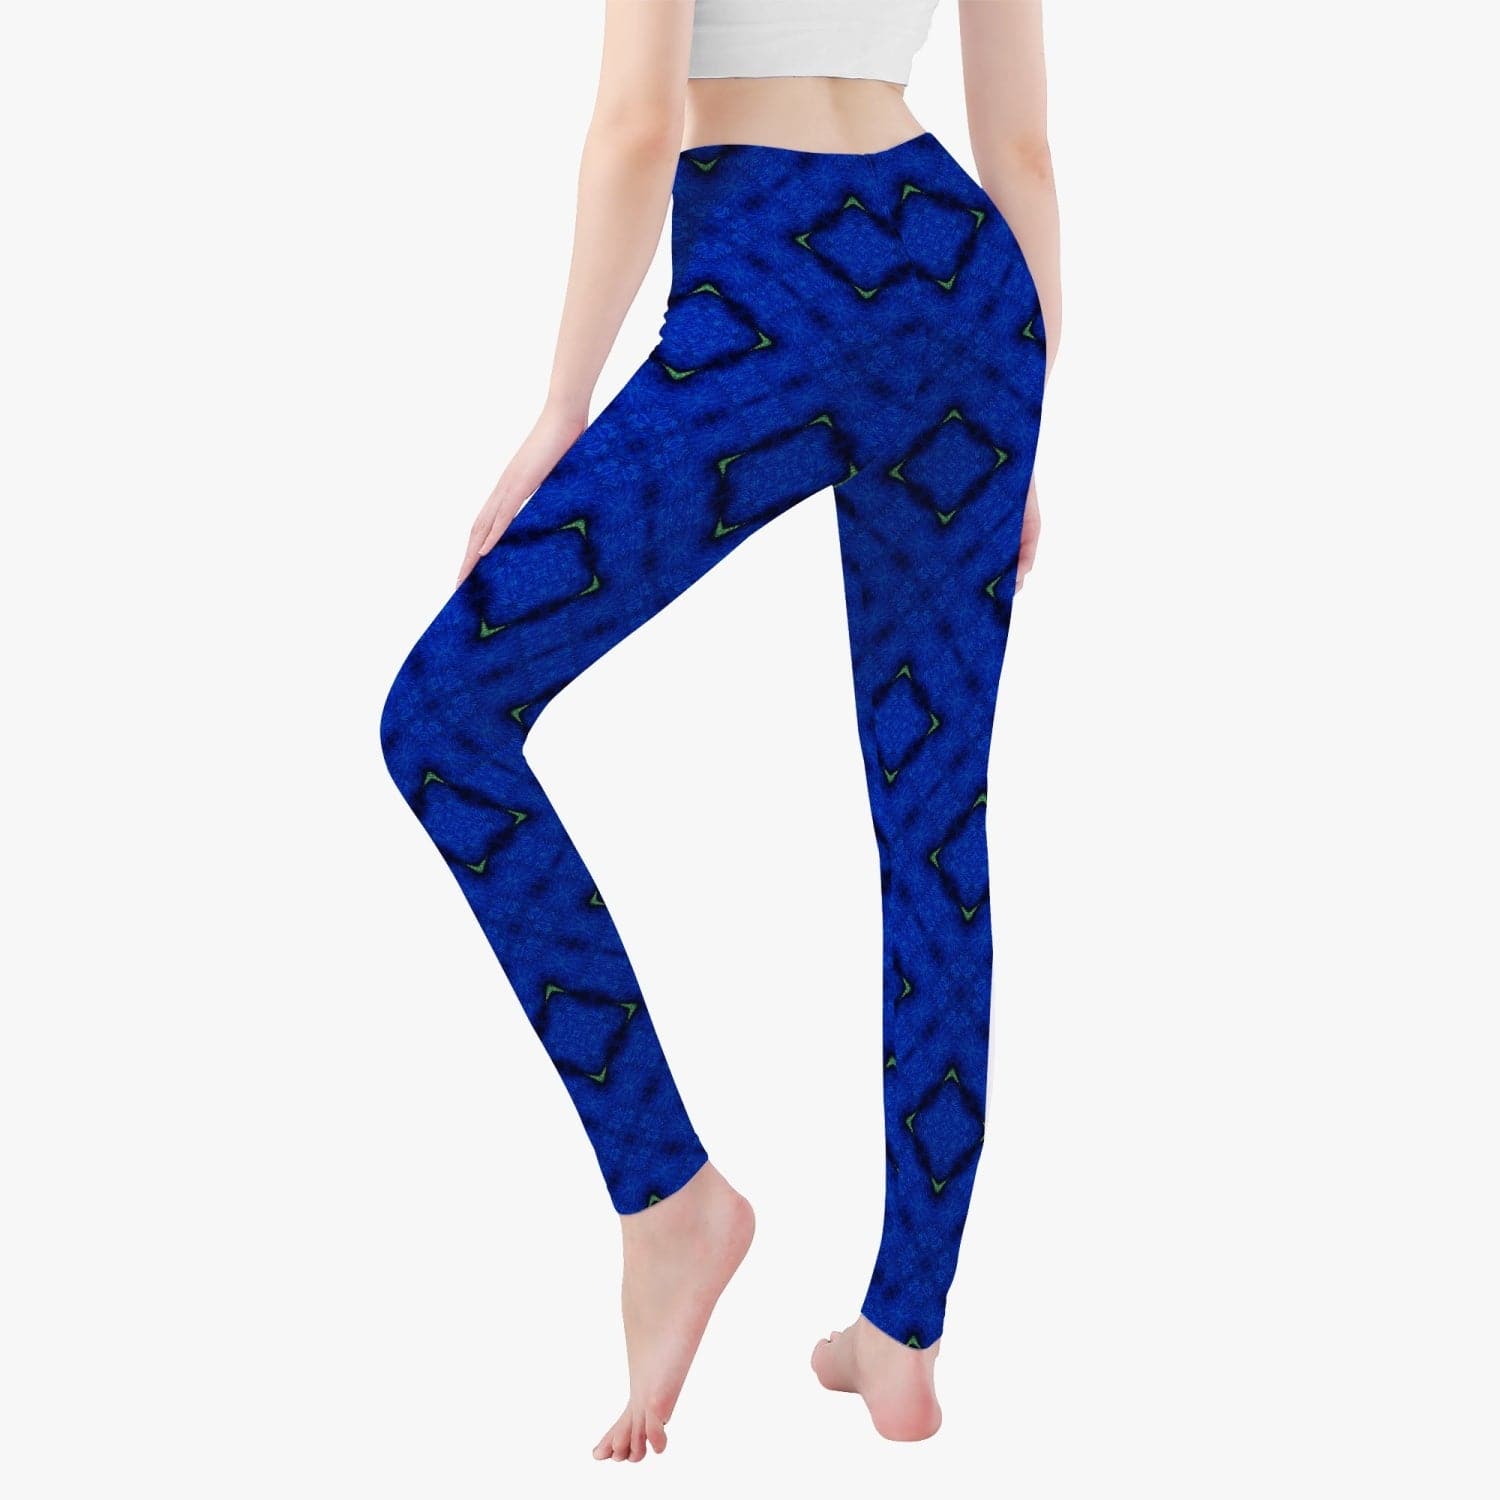 Indigo Third Eye Chacra  Yoga Pants, by Sensus Studio Design